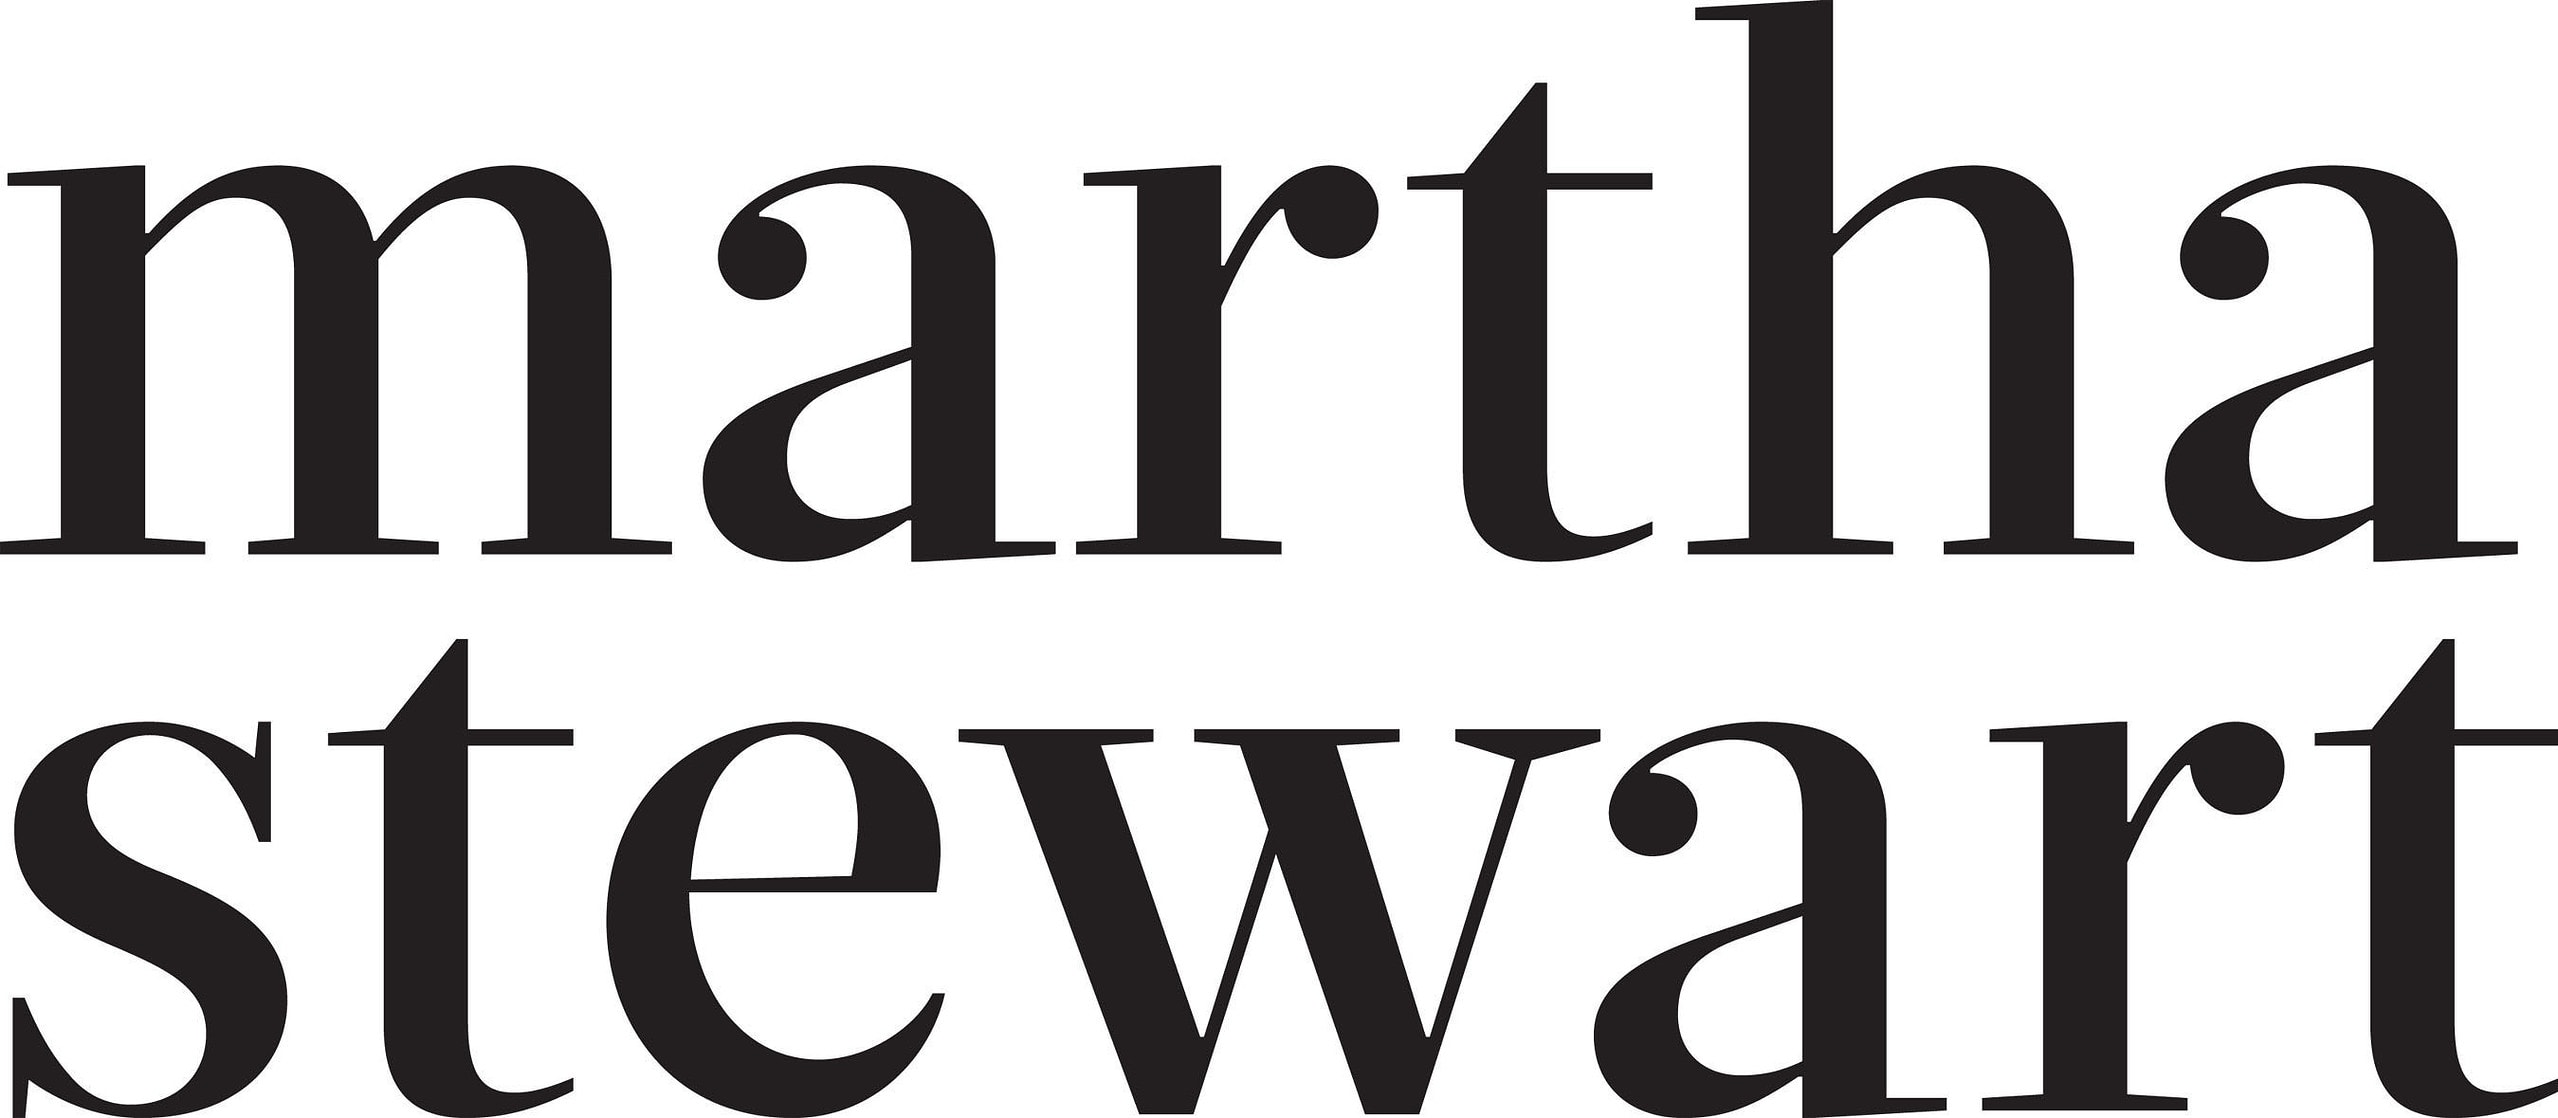 Martha stewart logo on a white background.